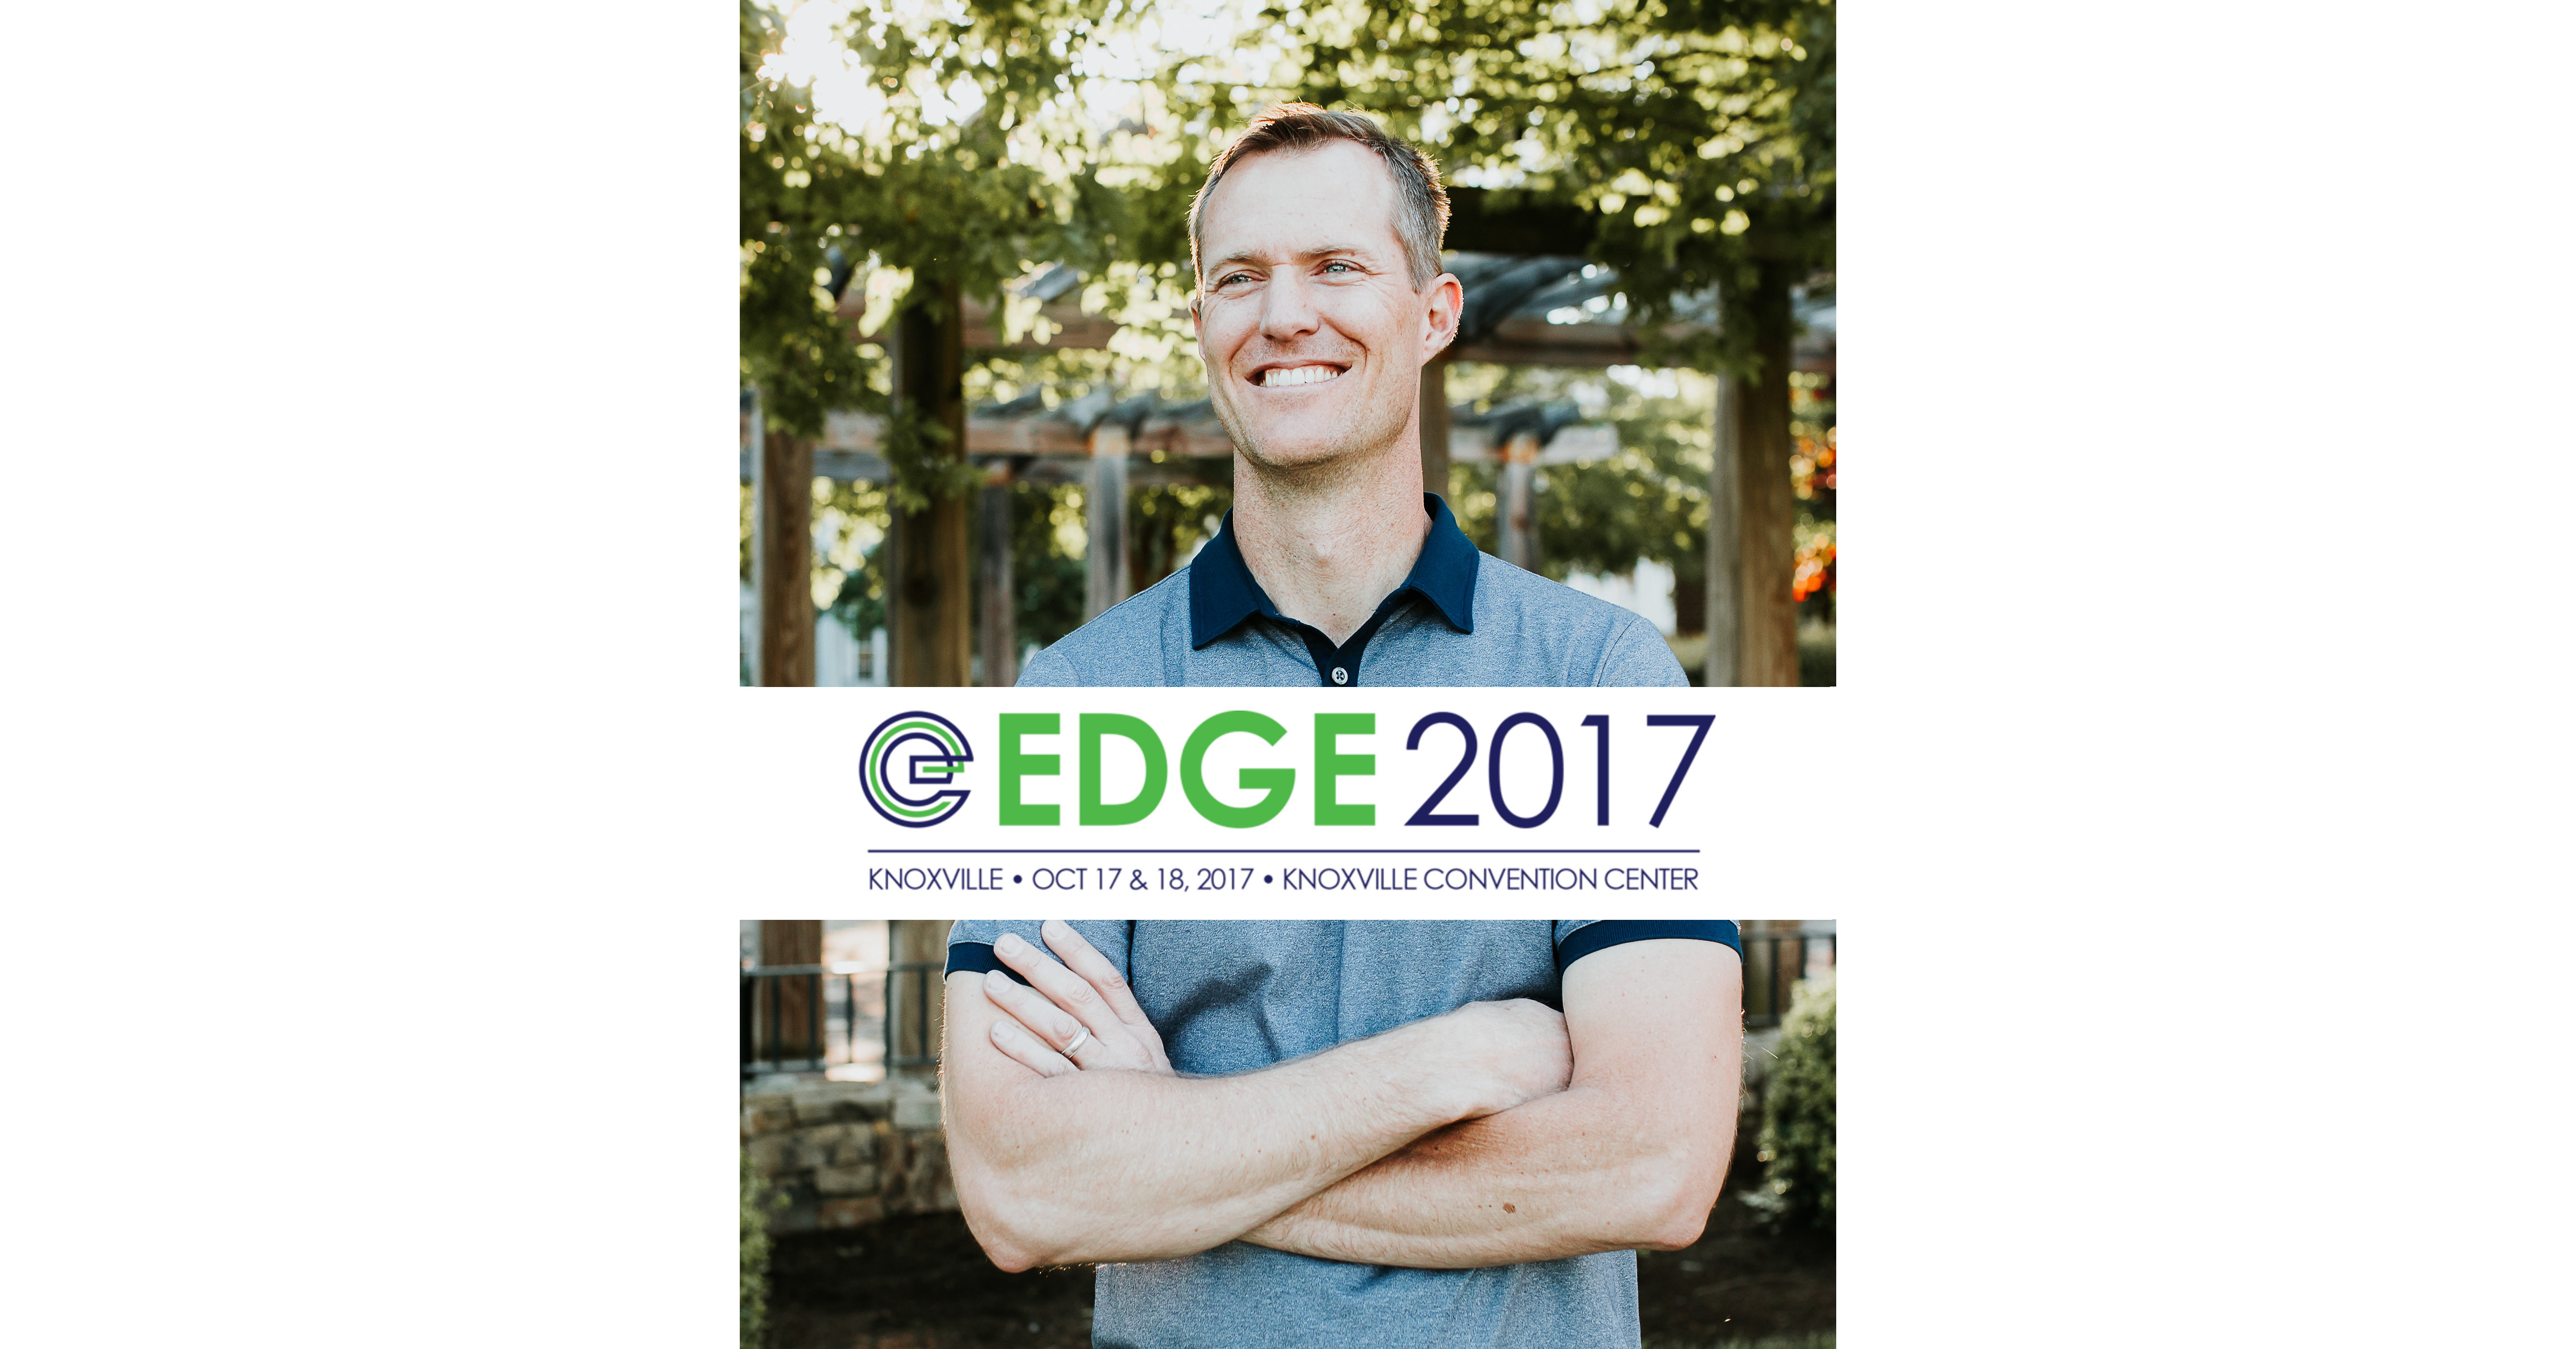 Popular Tech Entrepreneur to Emcee EDGE2017 Cybersecurity Conference - PR Newswire (press release)